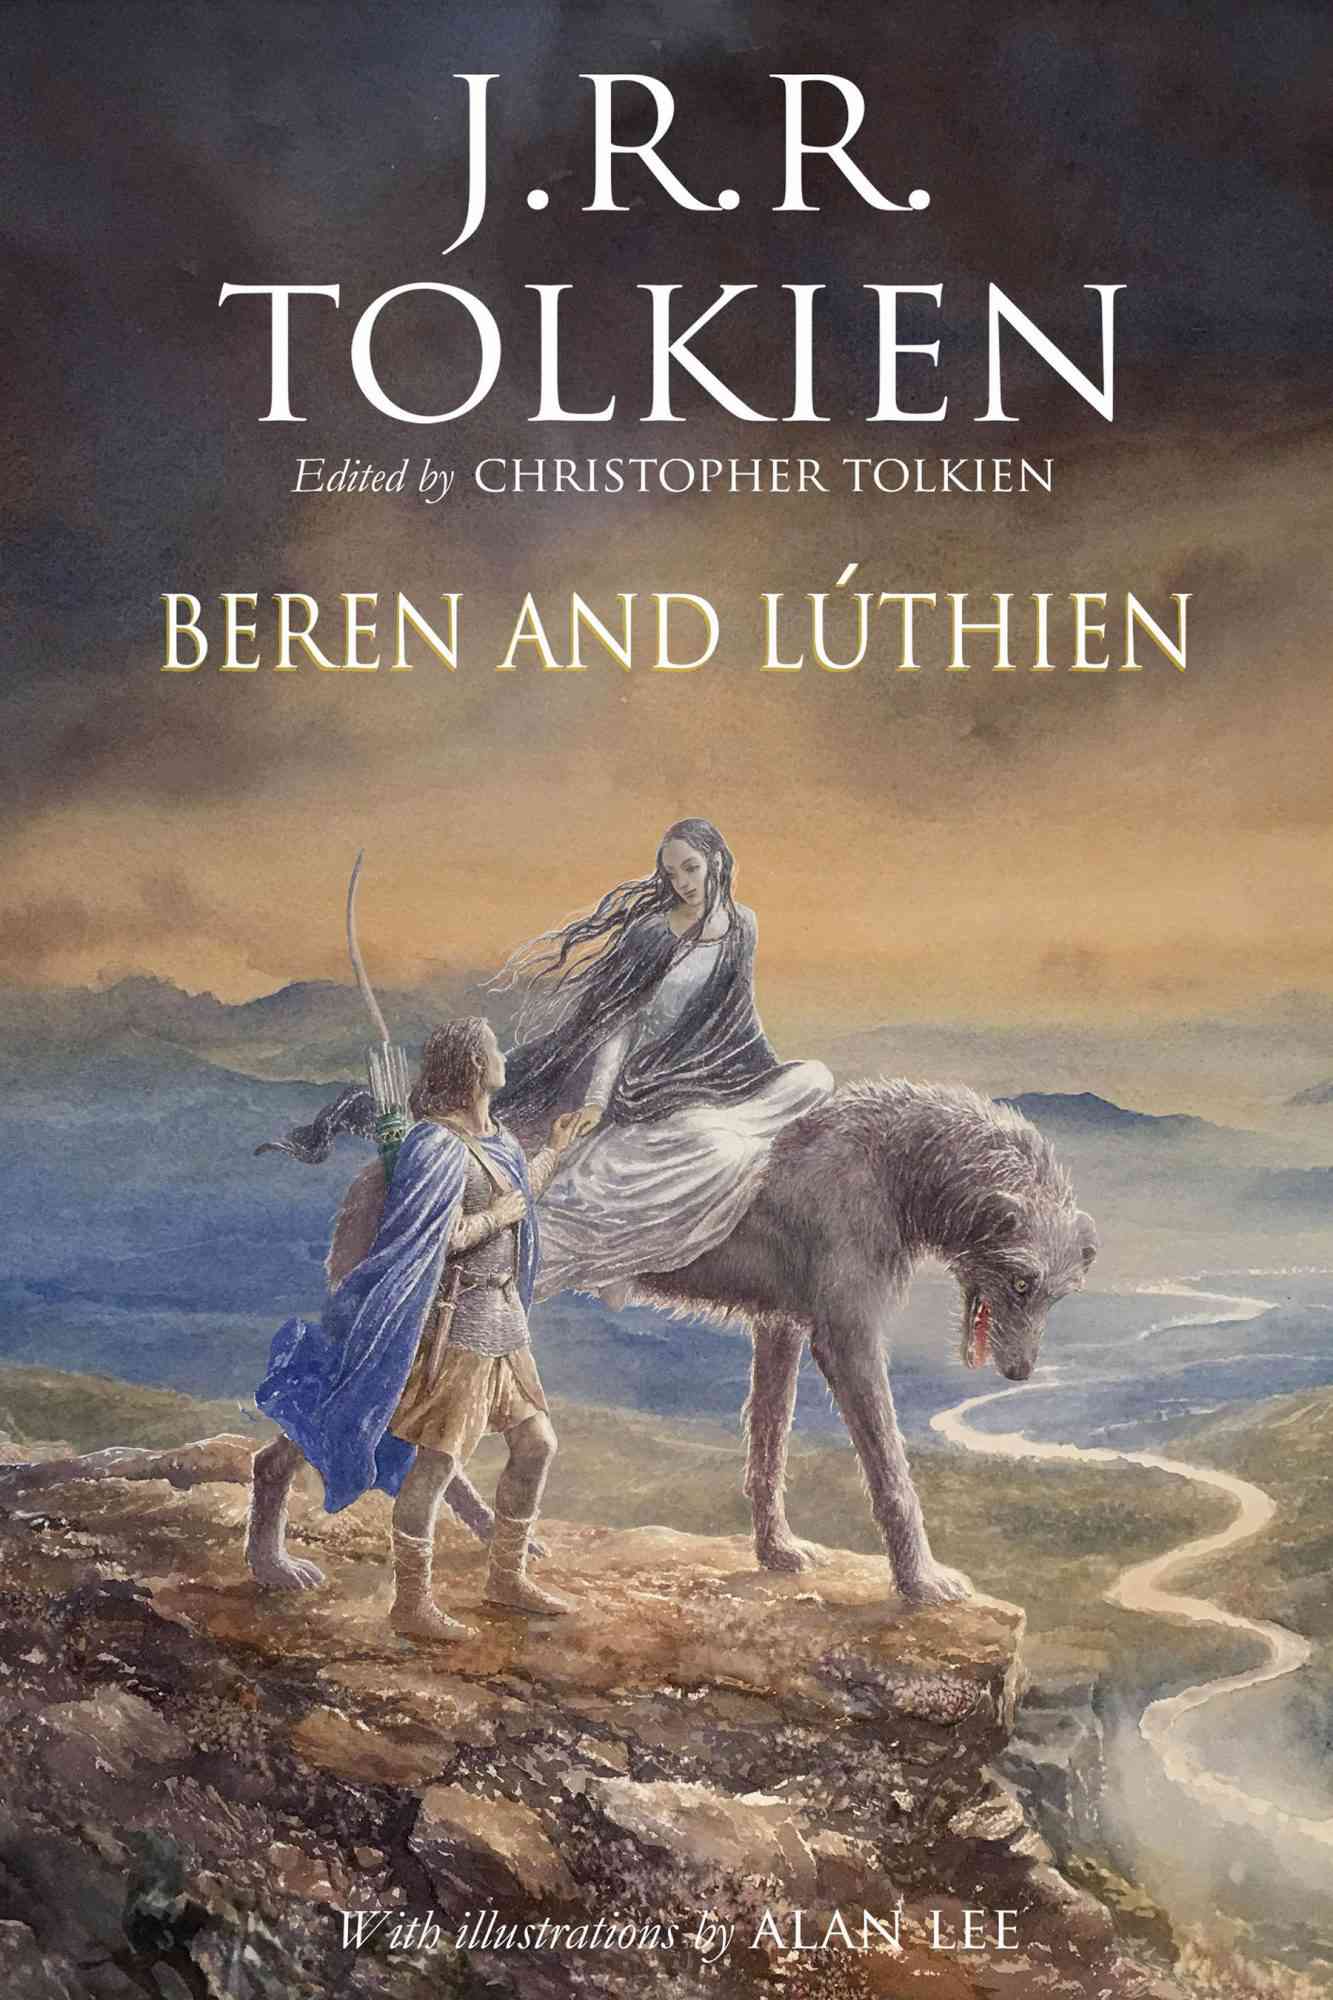 Beren and Luthien by JRR Tolkien